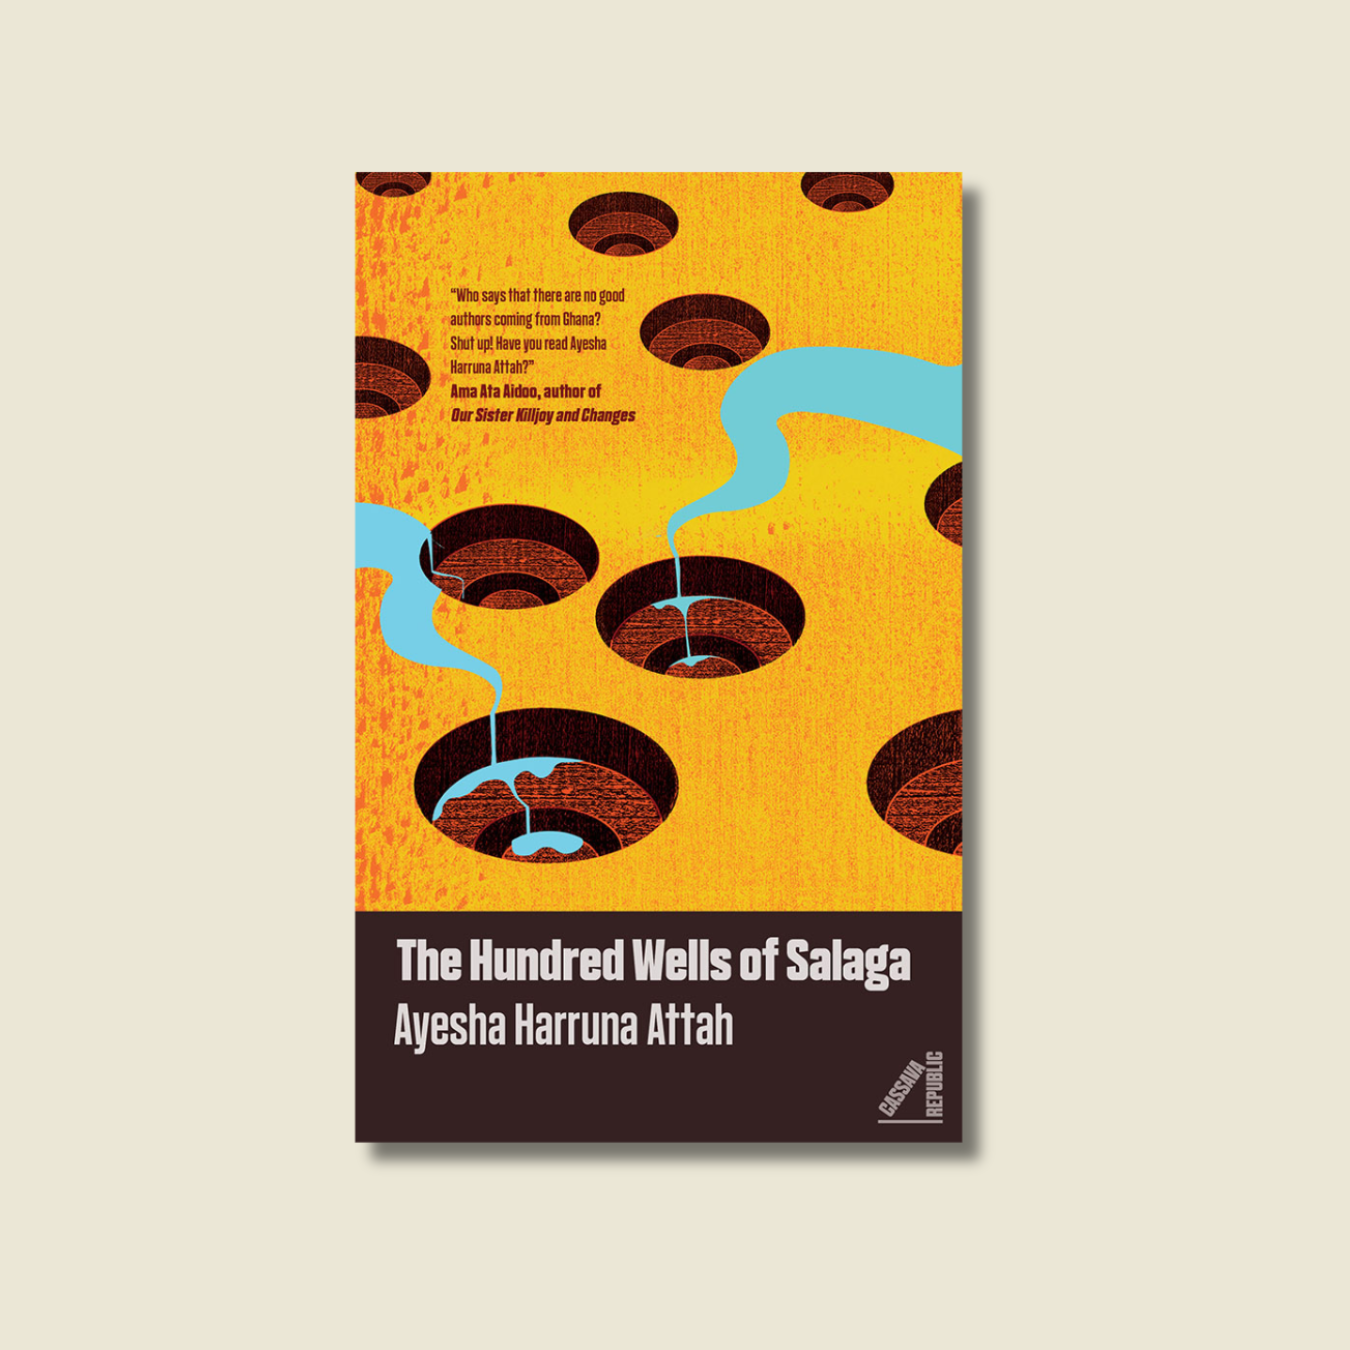 THE HUNDRED WELLS OF SALAGA BY AYESHA HARRUNA ATTAH